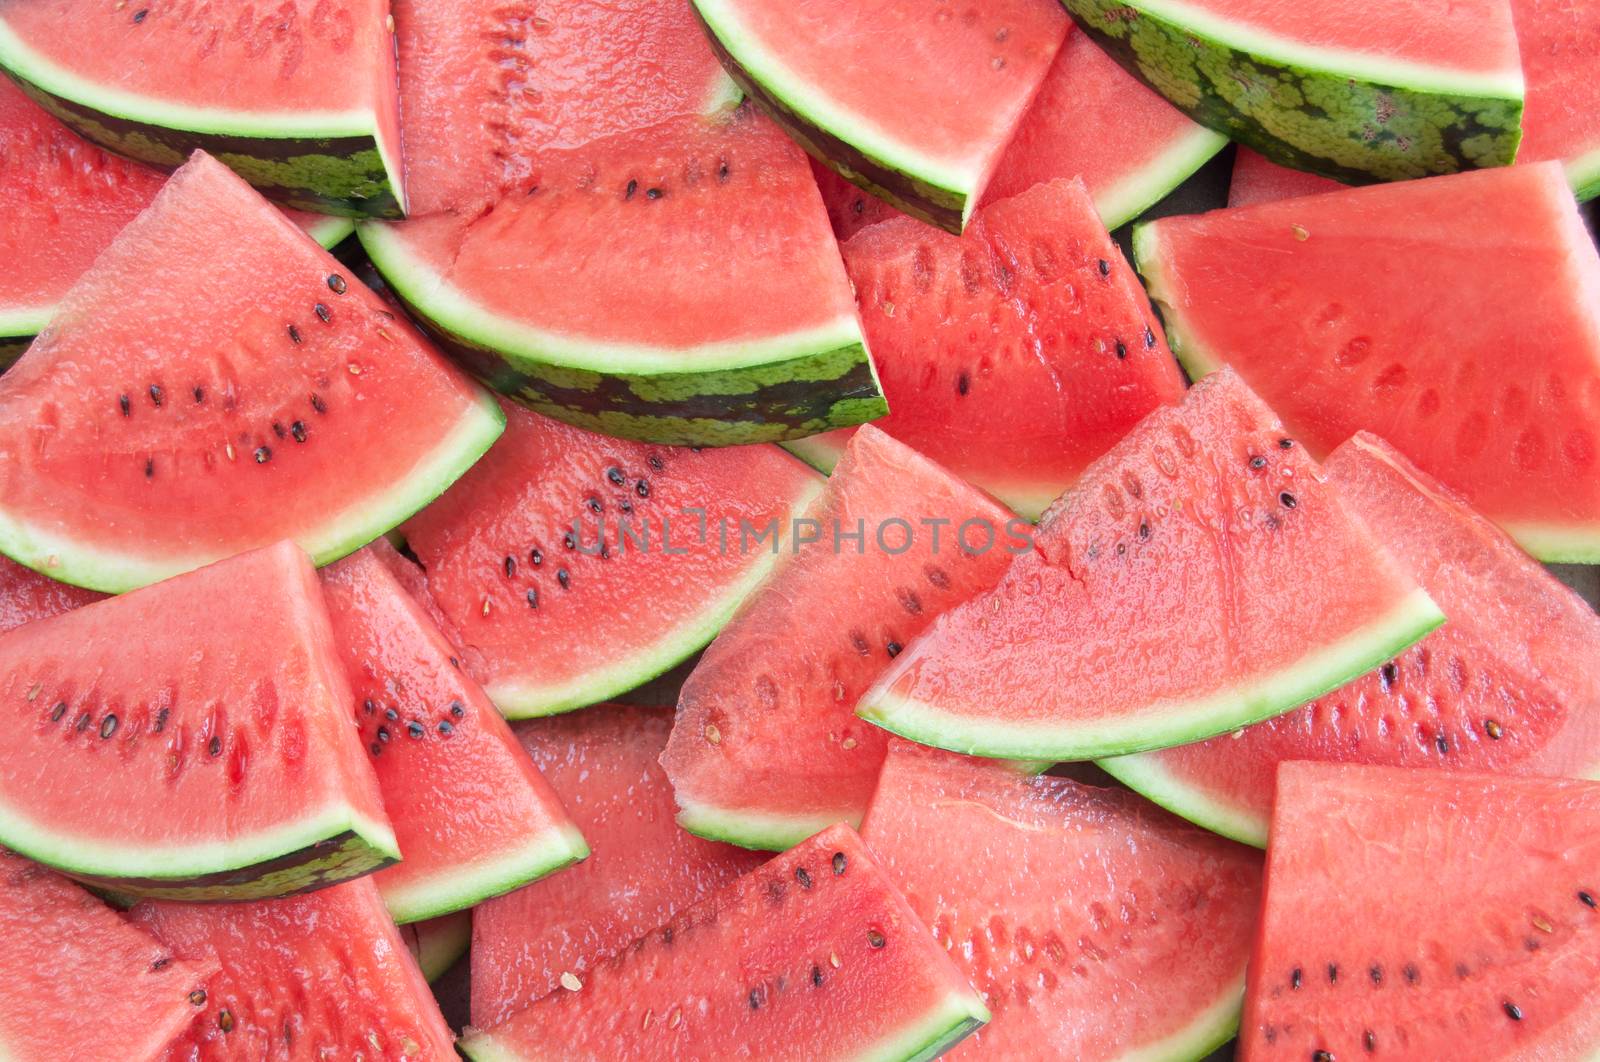 Many fresh watermelon slices close up